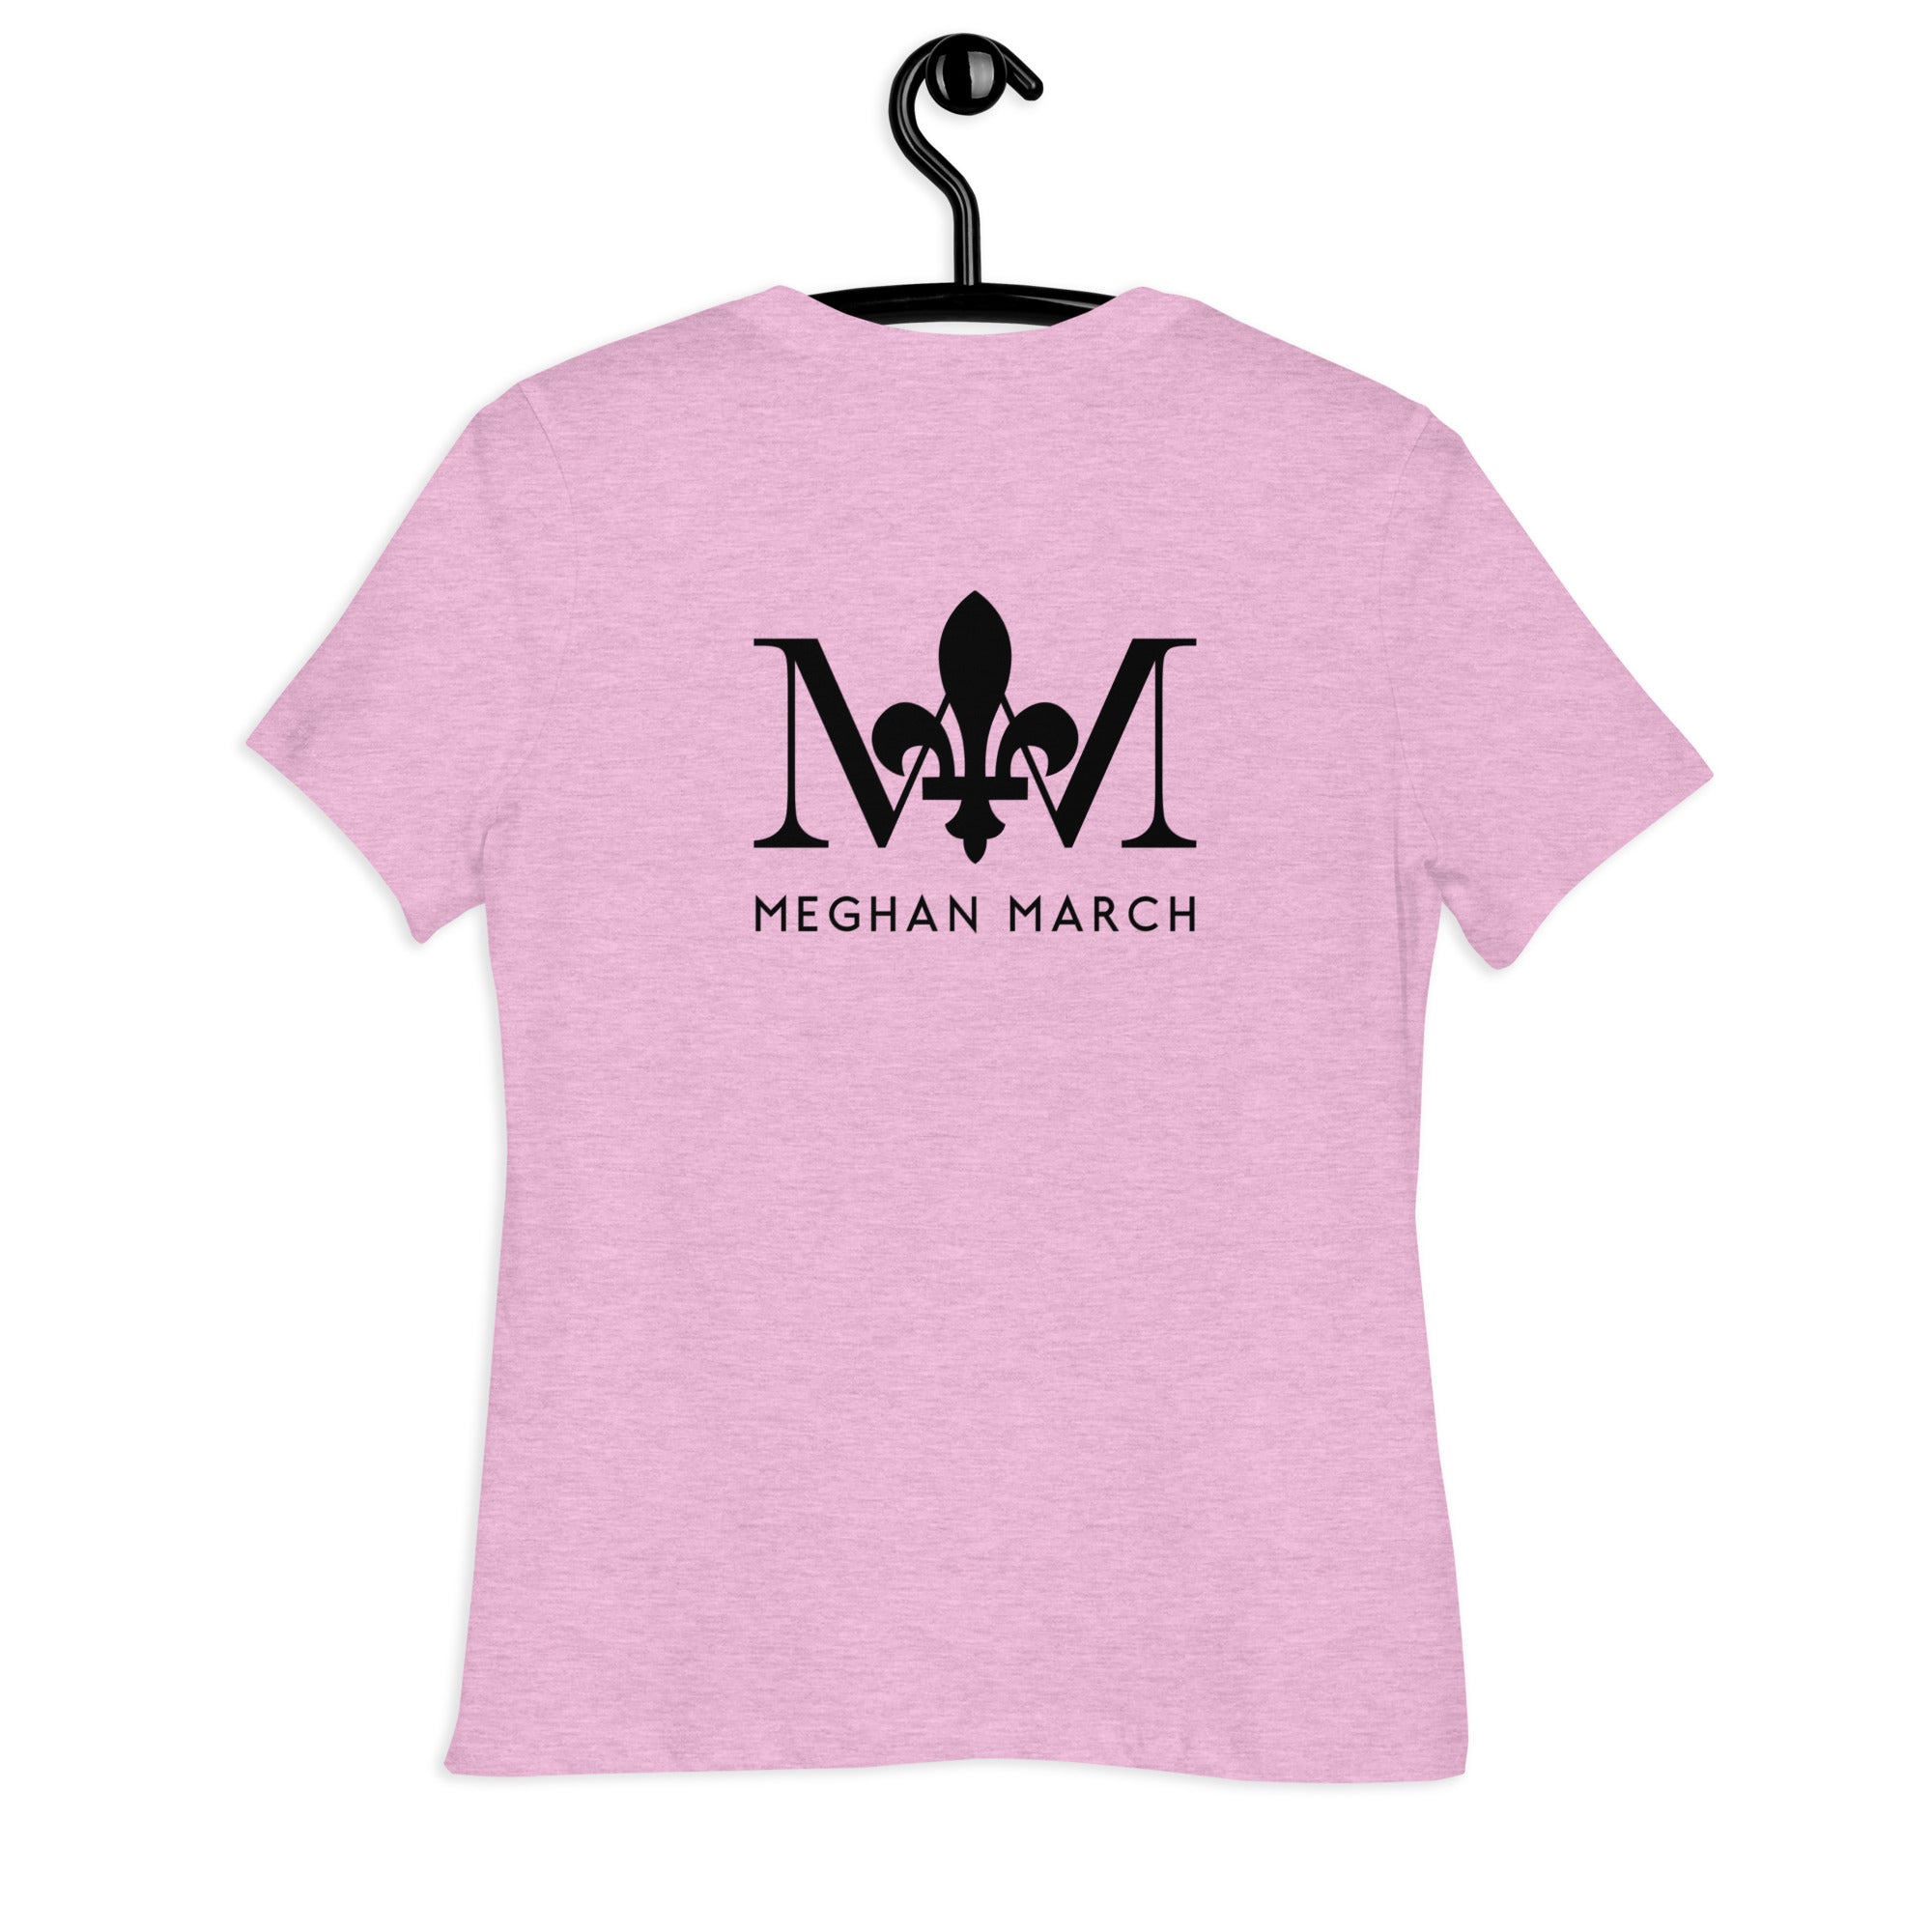 Release the Kraken Women's T-Shirt